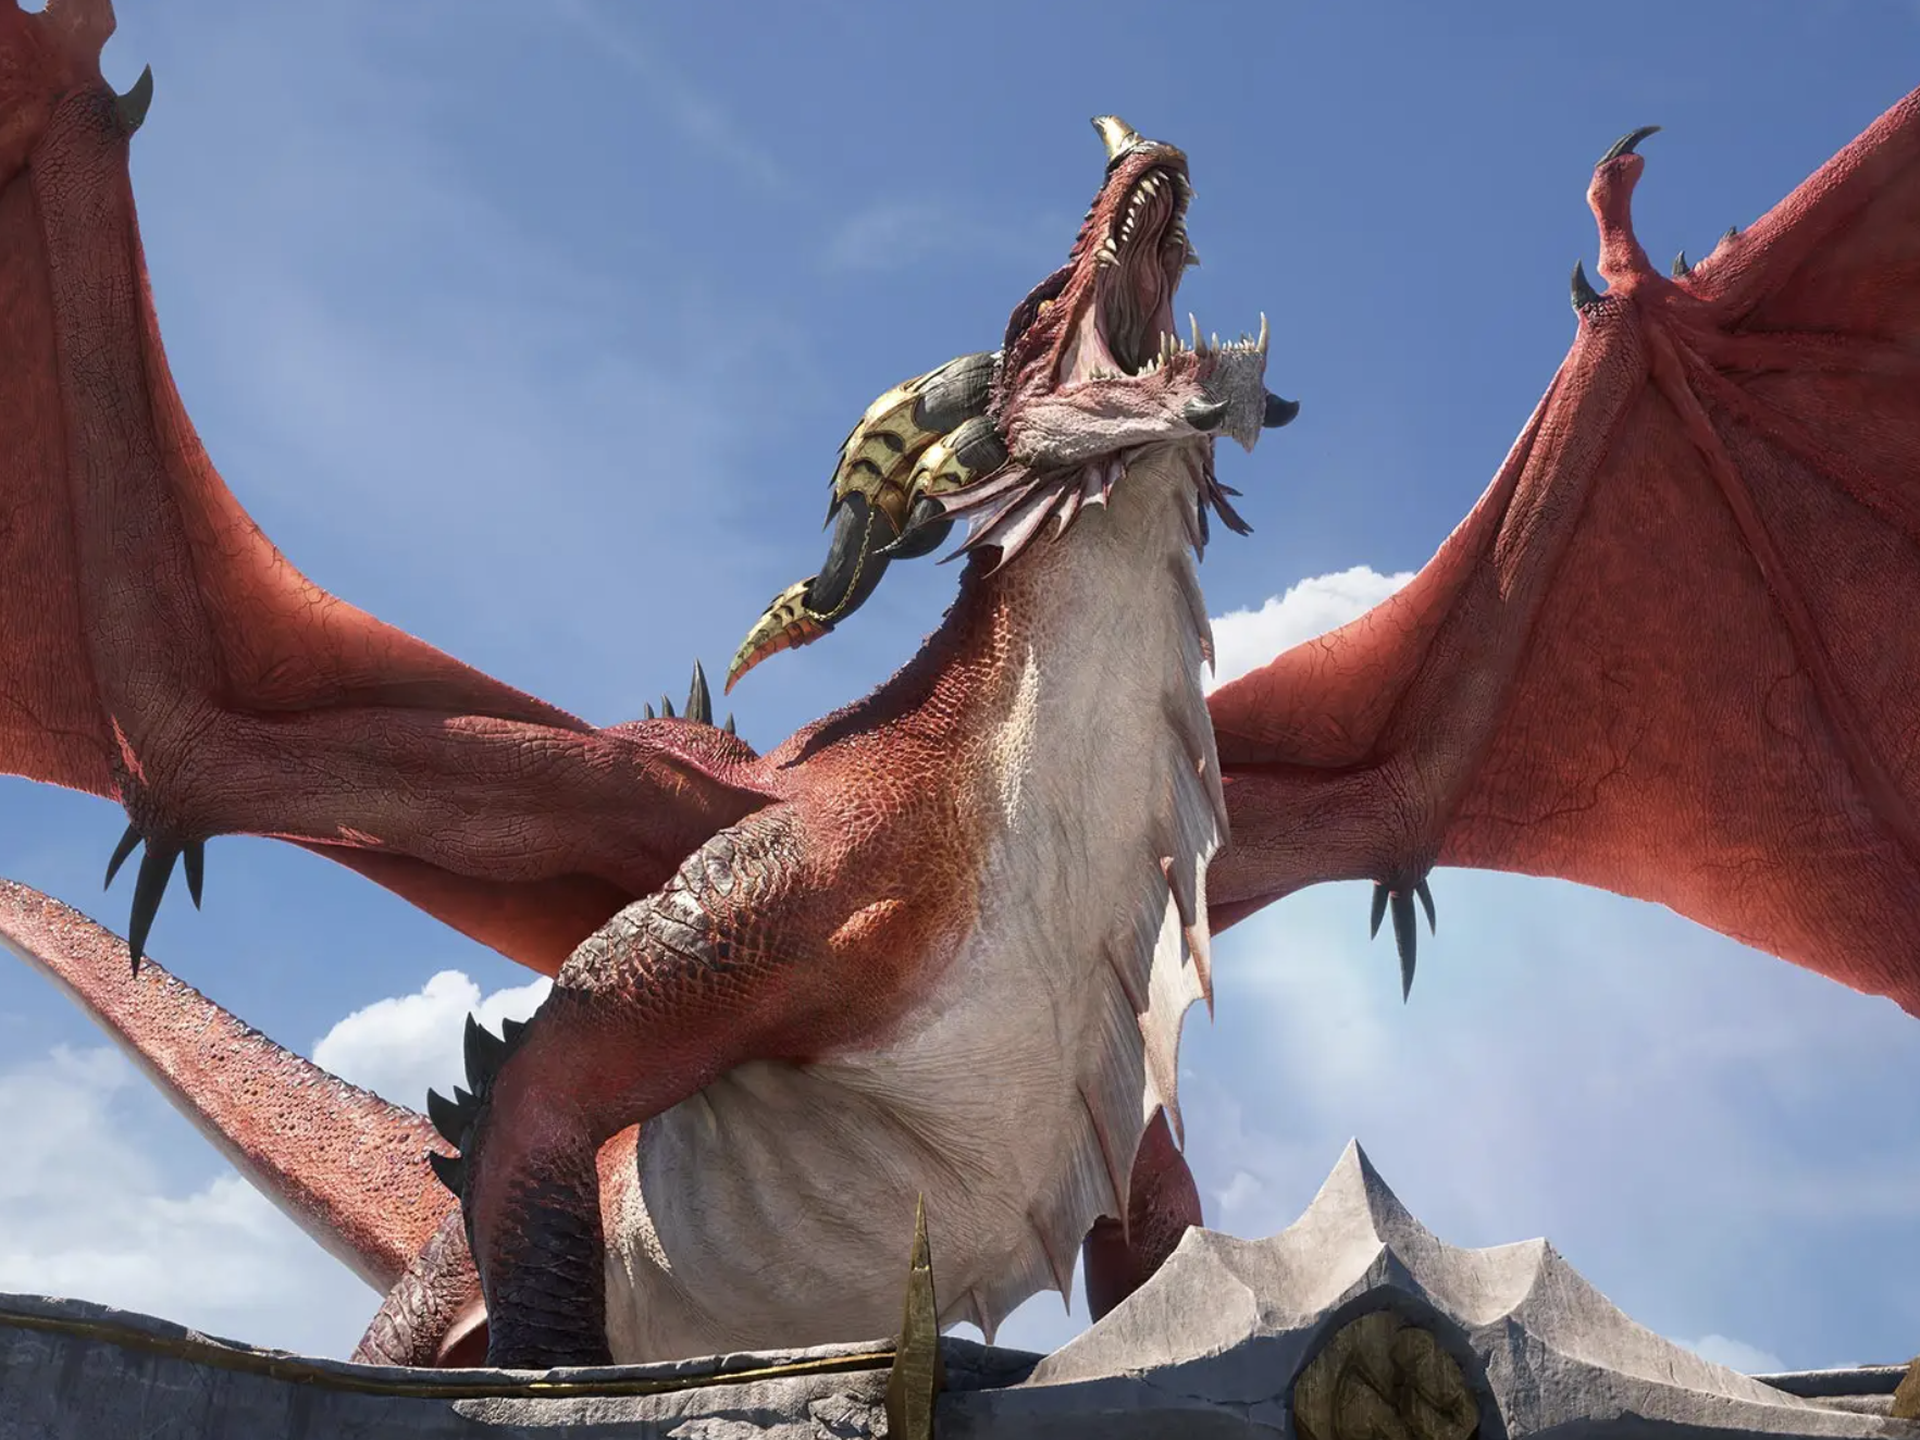 Gambody STL files of Viserion Dragon Game of Thrones for 3D Printer